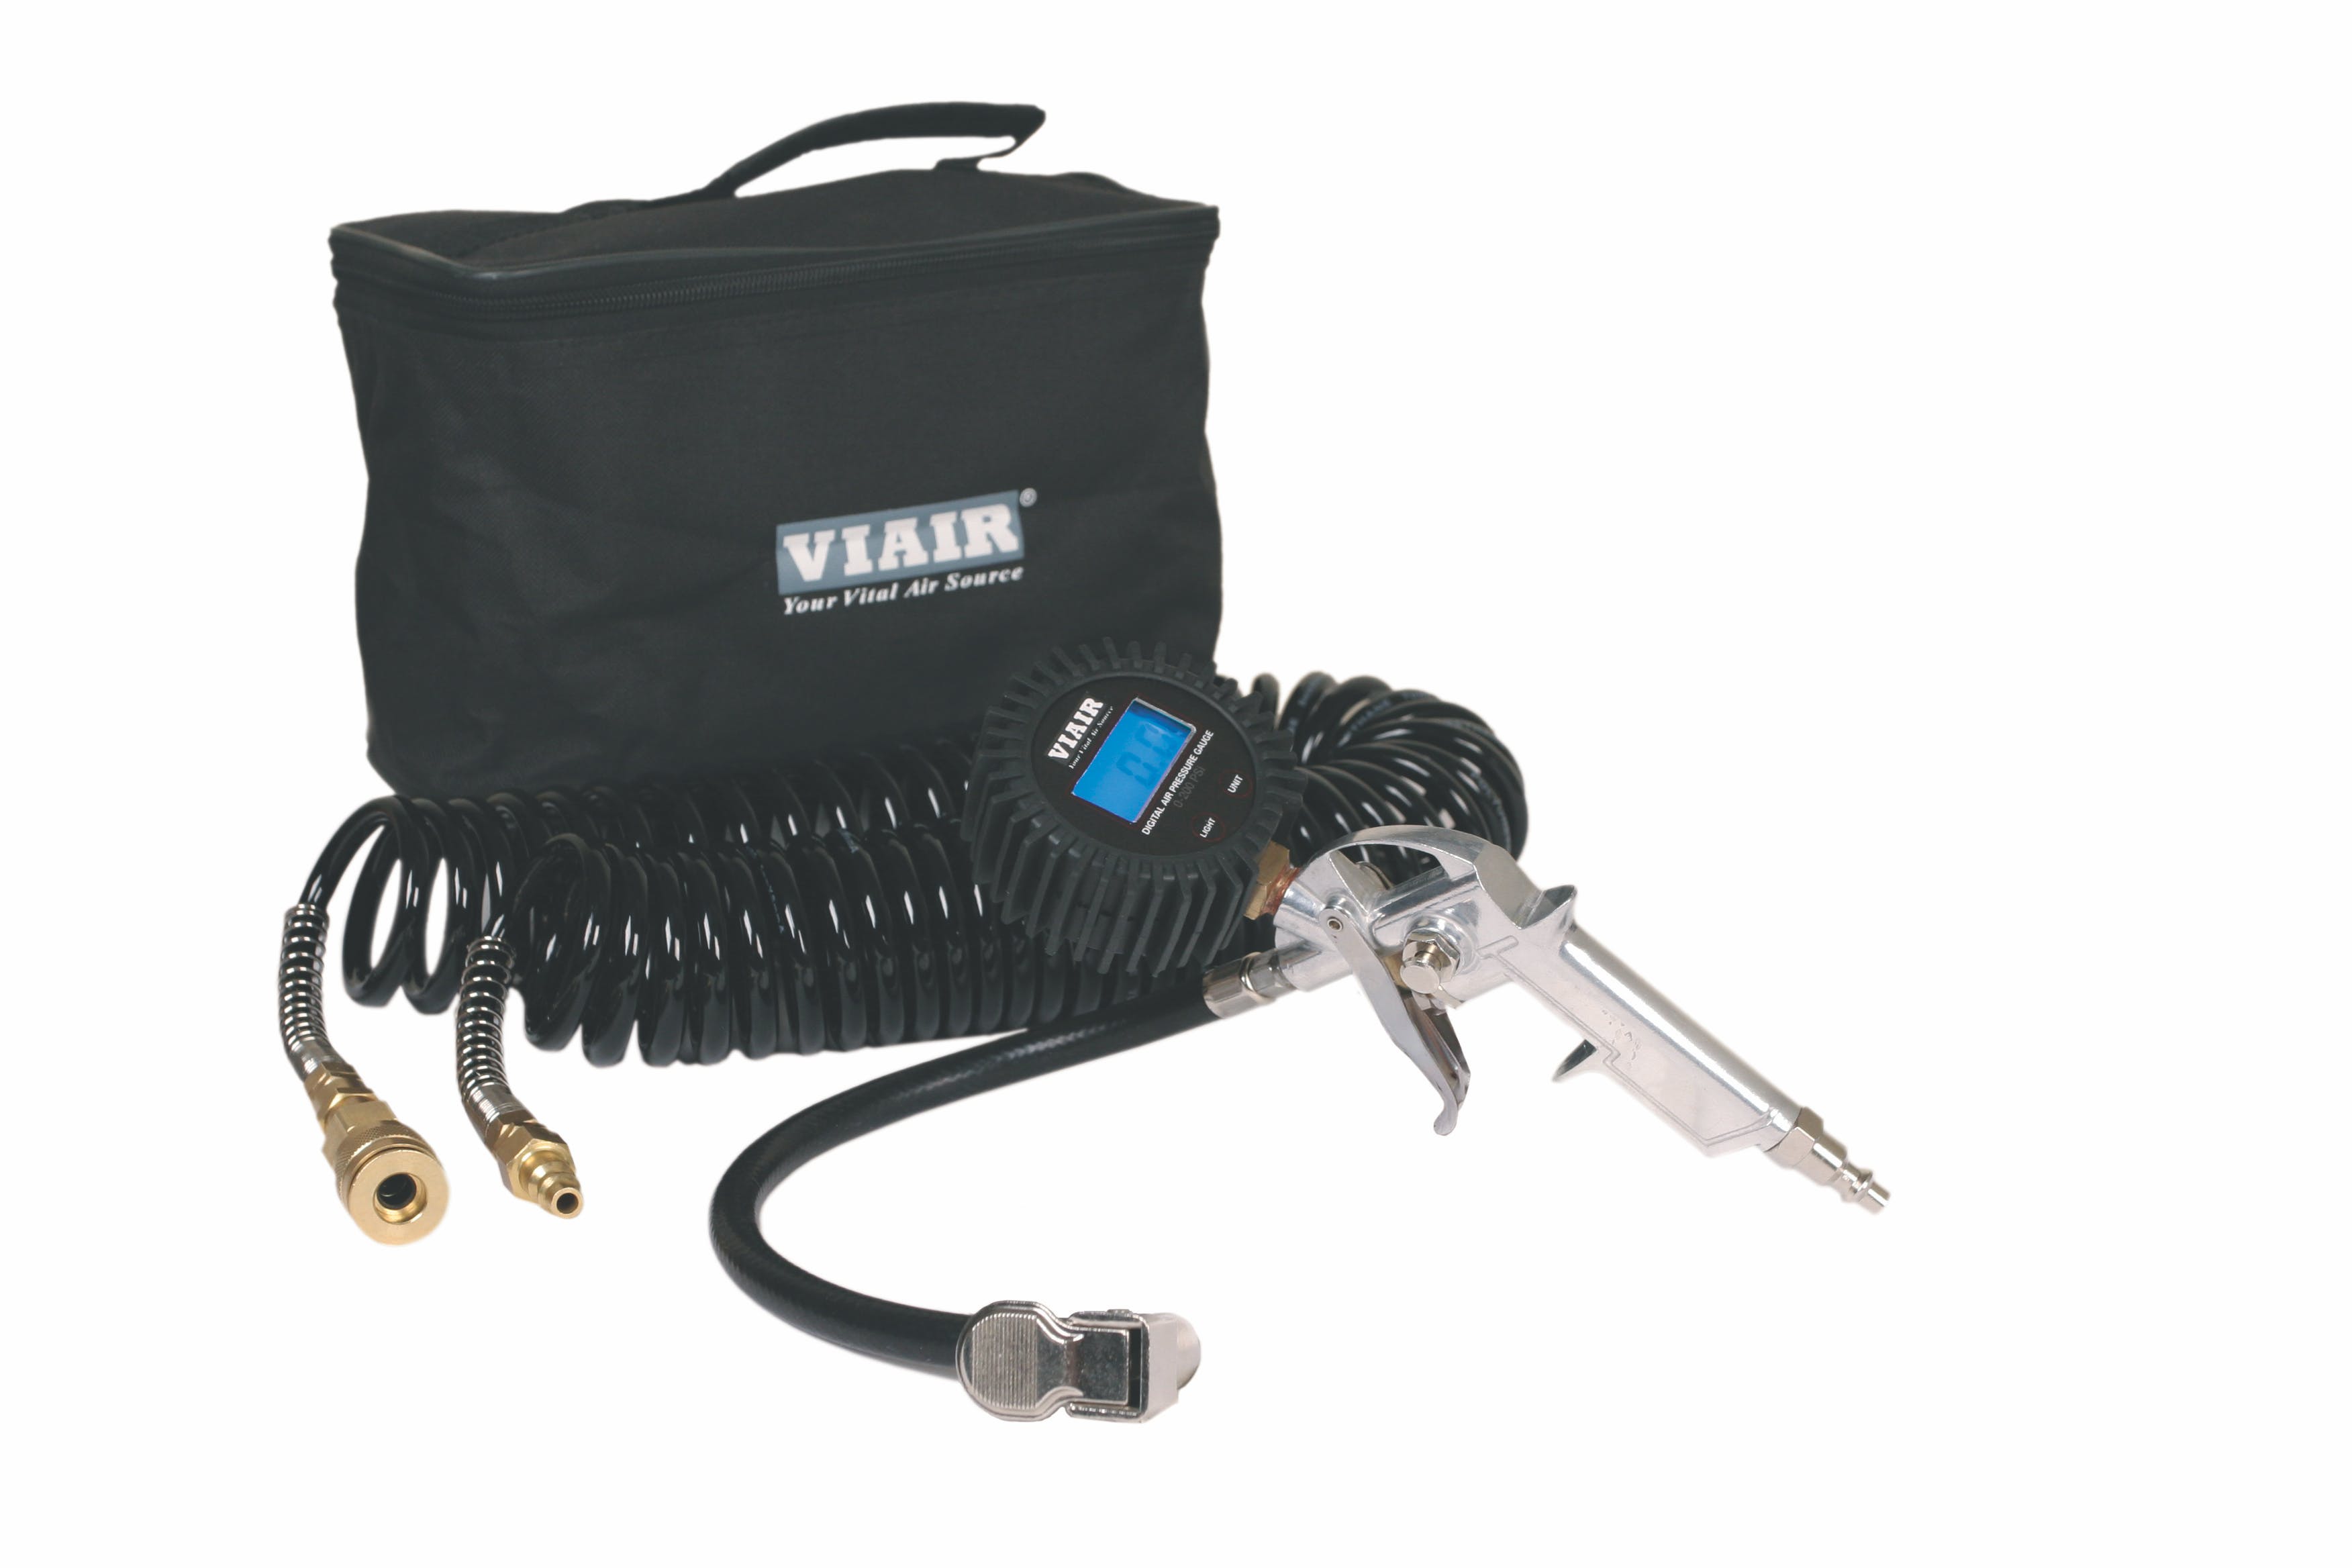 VIAIR 00044 Inflation Kit, Digital Tire Gun